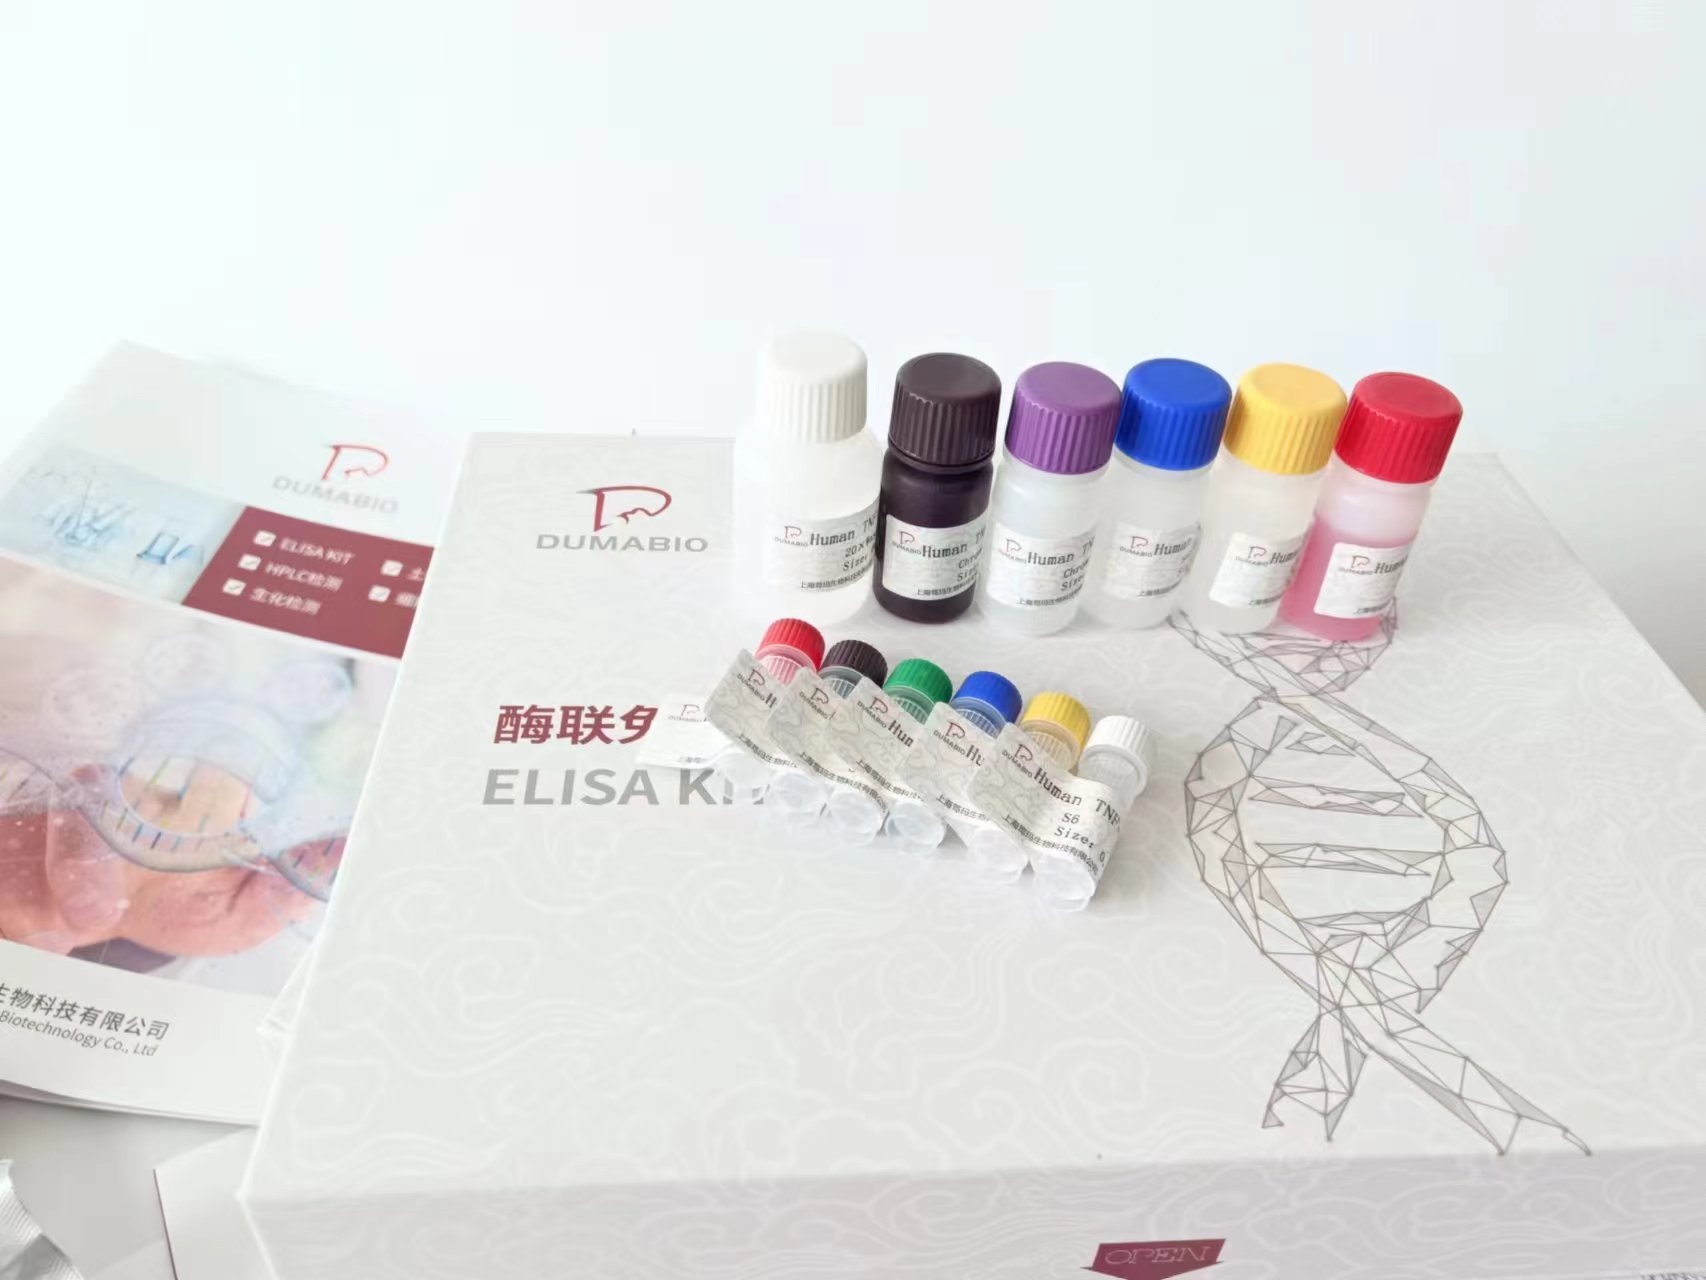 人甲状腺素抗体(TAb)ELISA试剂盒